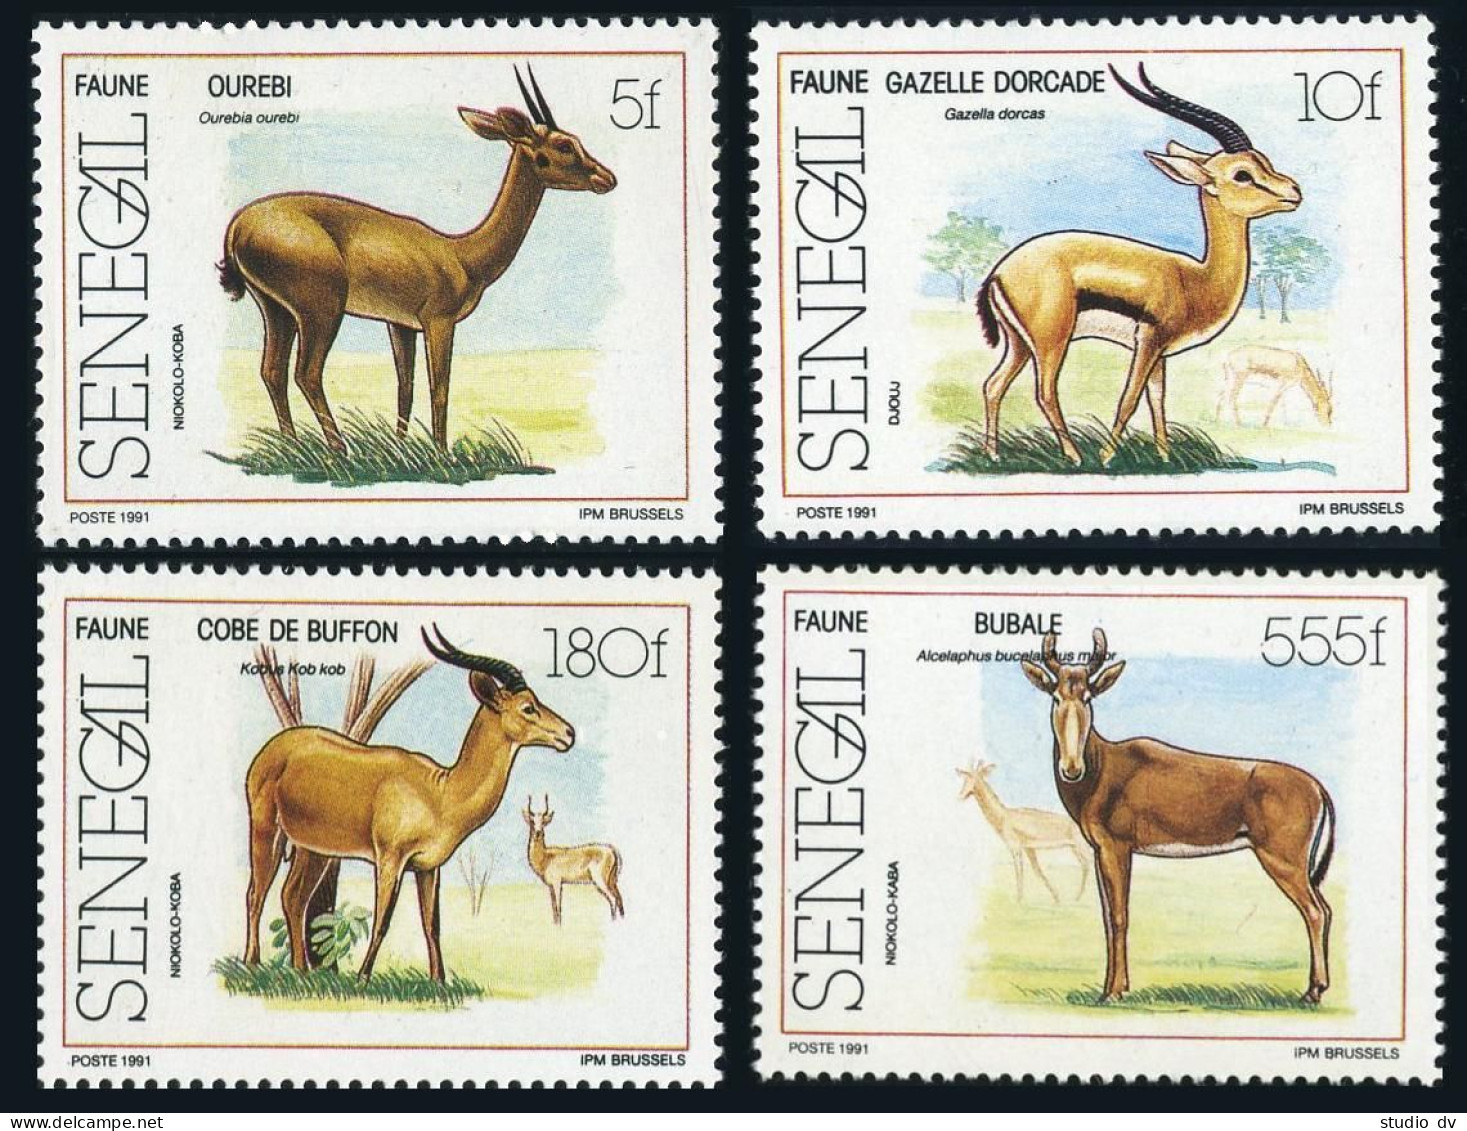 Senegal 924-927, MNH. Michel 1127-1130. Antelopes 1991. - Senegal (1960-...)